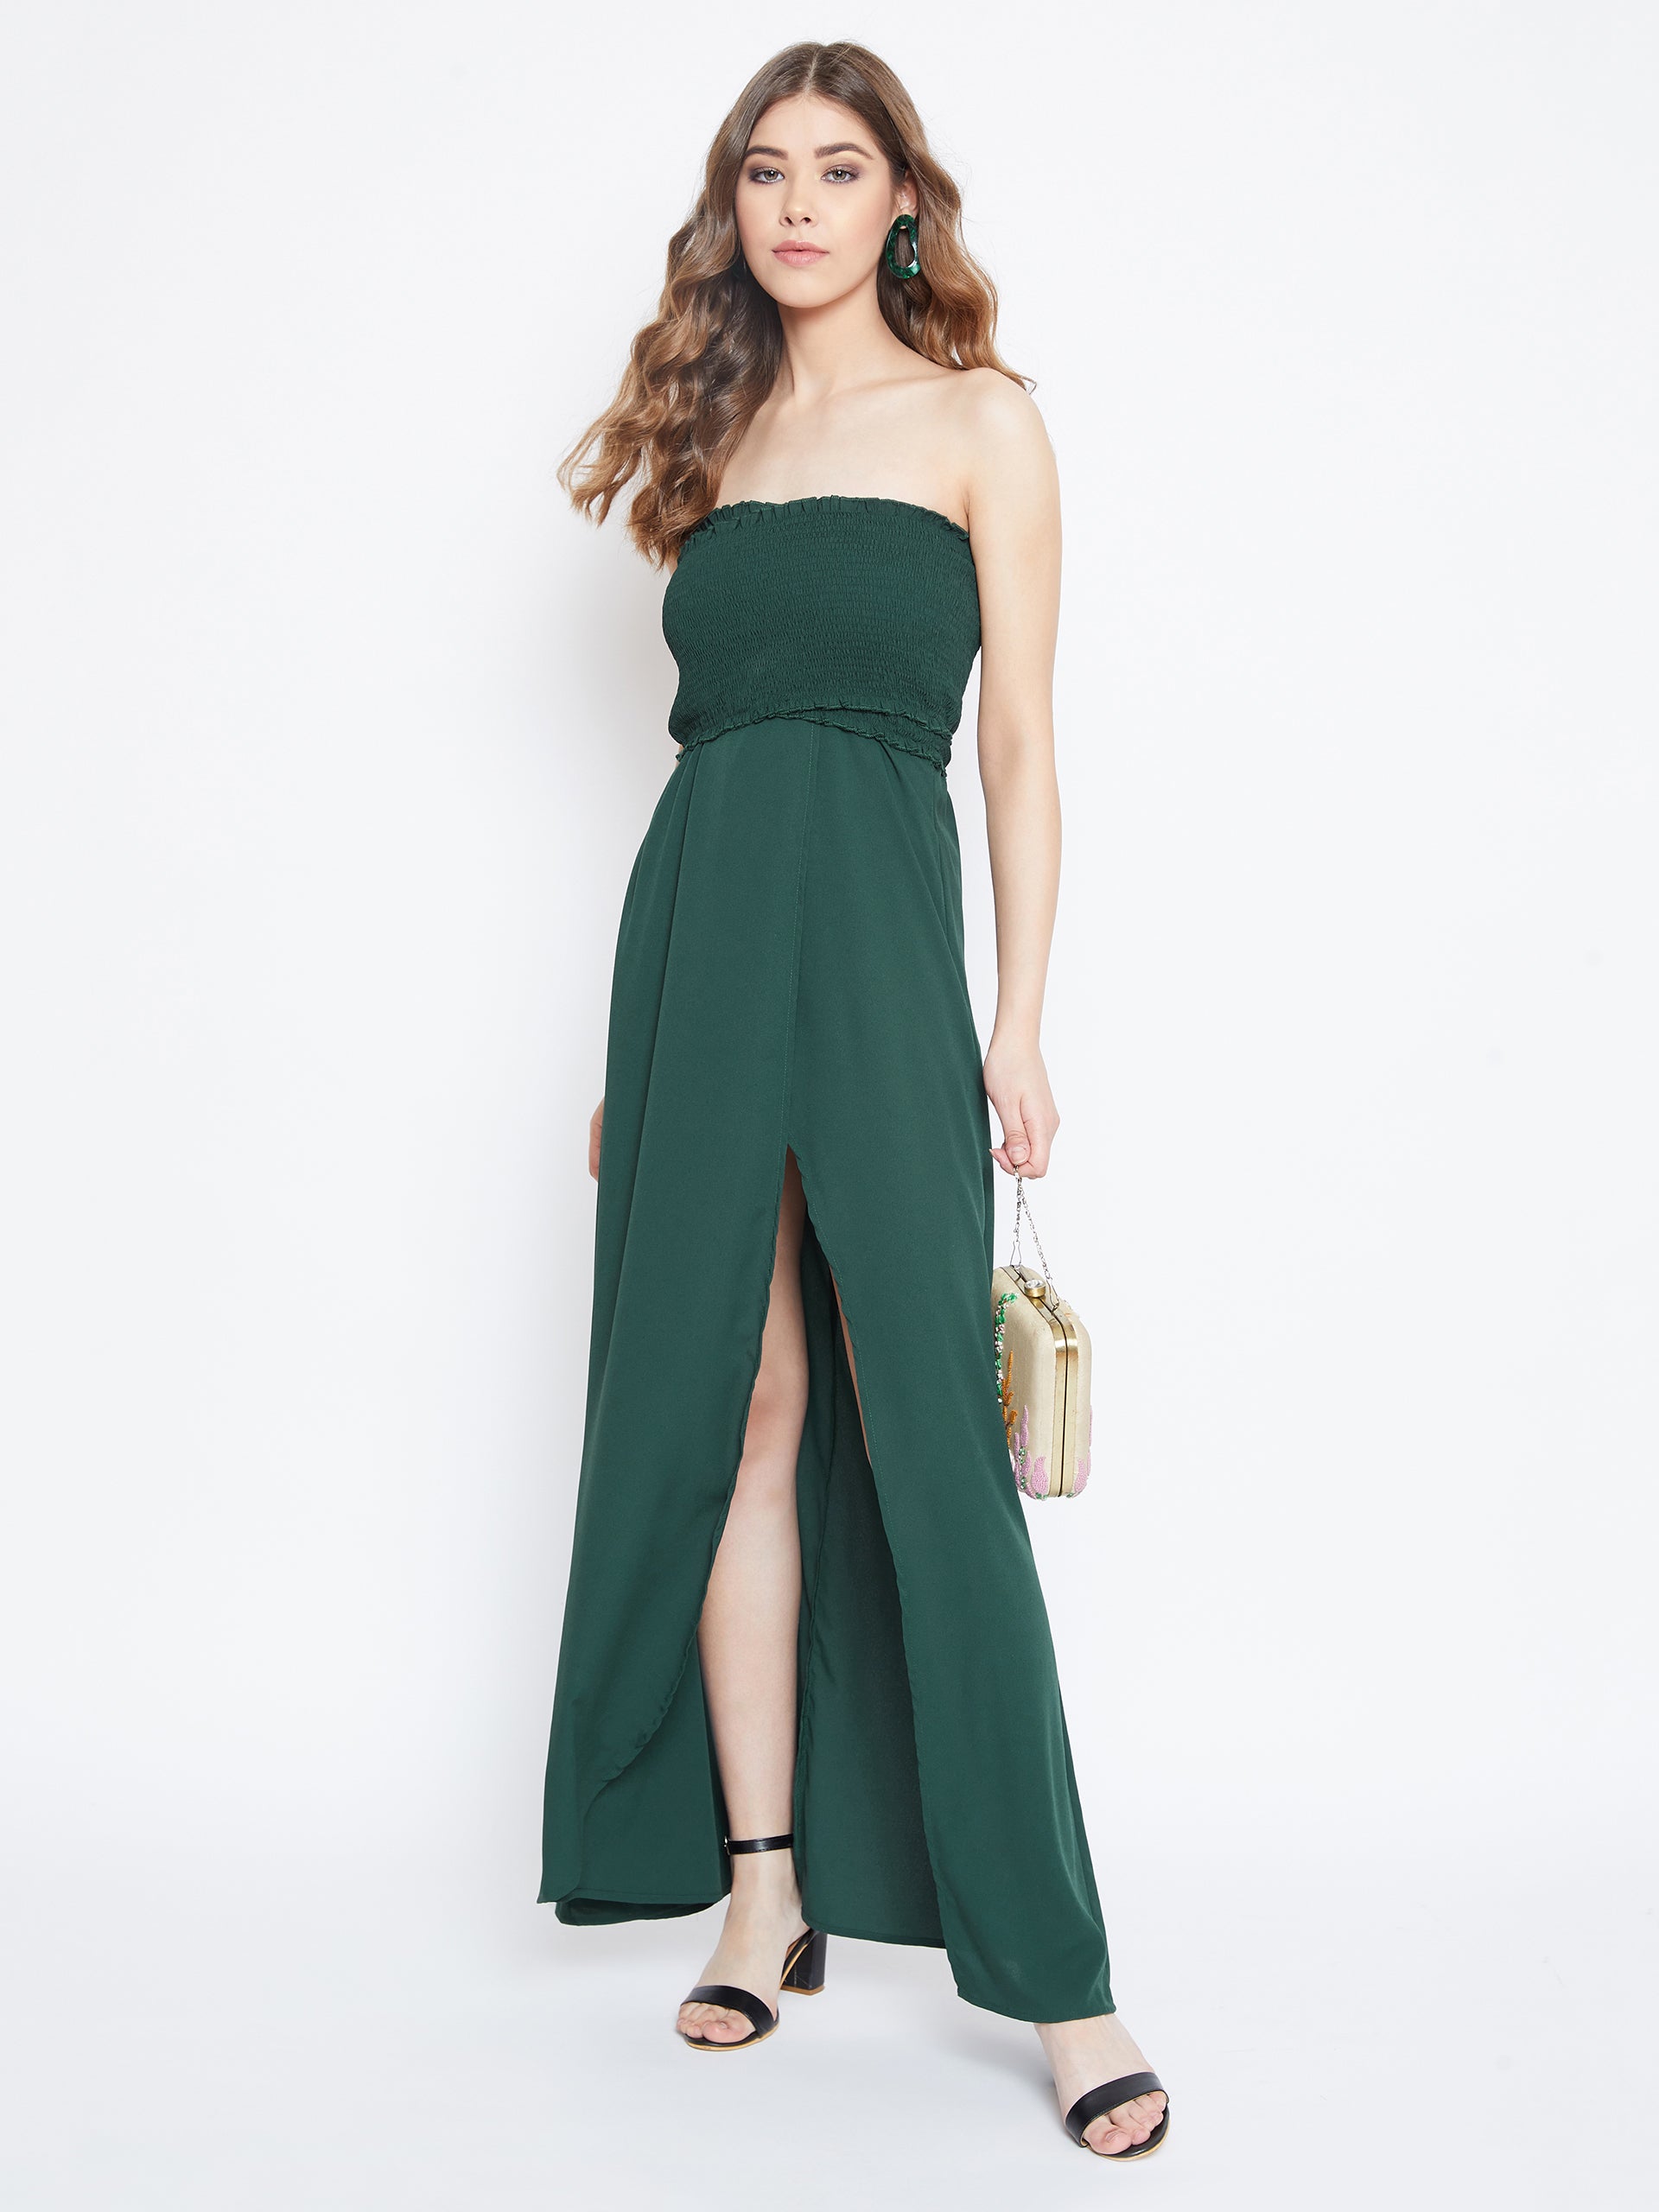 Berrylush Women Solid Green Front Slit Smocked Maxi Dress